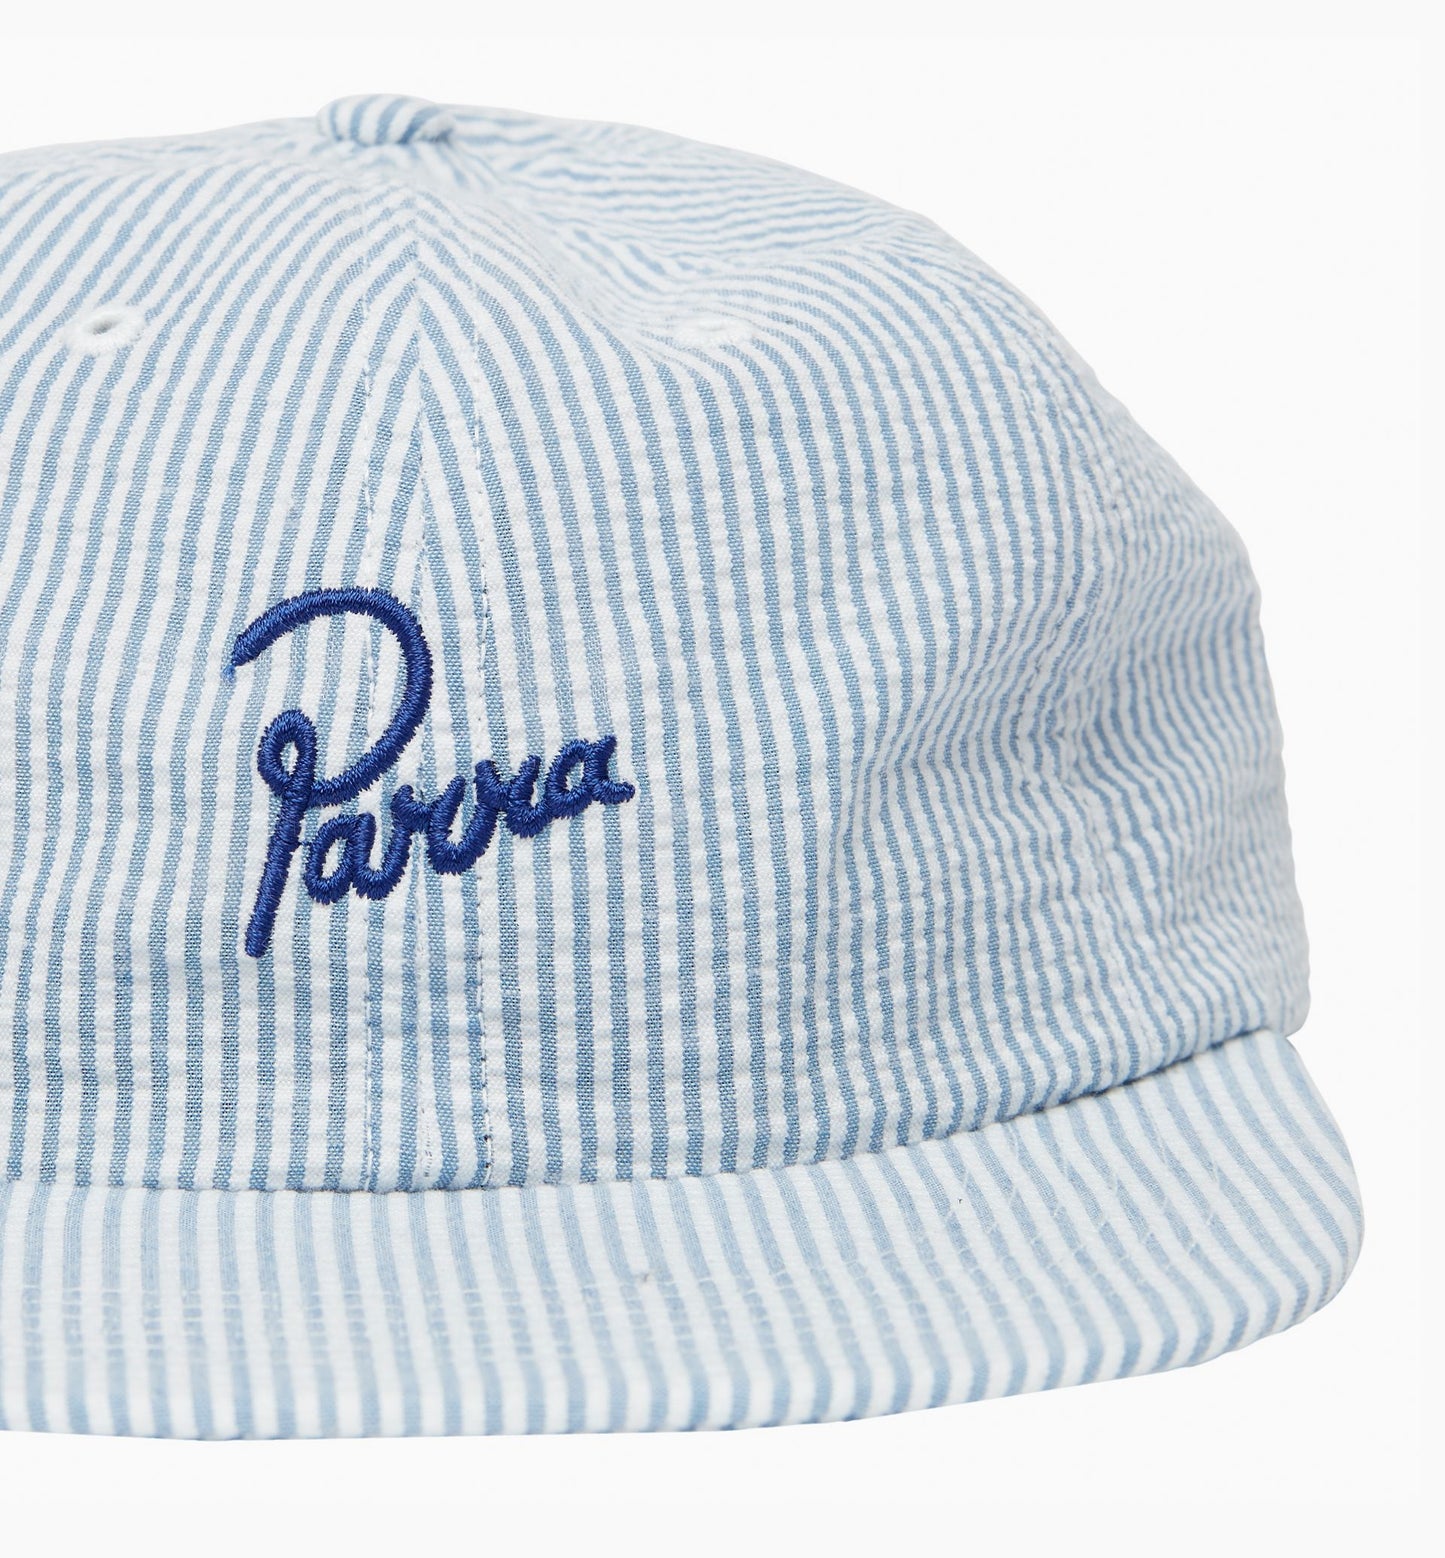 By Parra "Classic Logo 6 Panel Hat"-White Blue